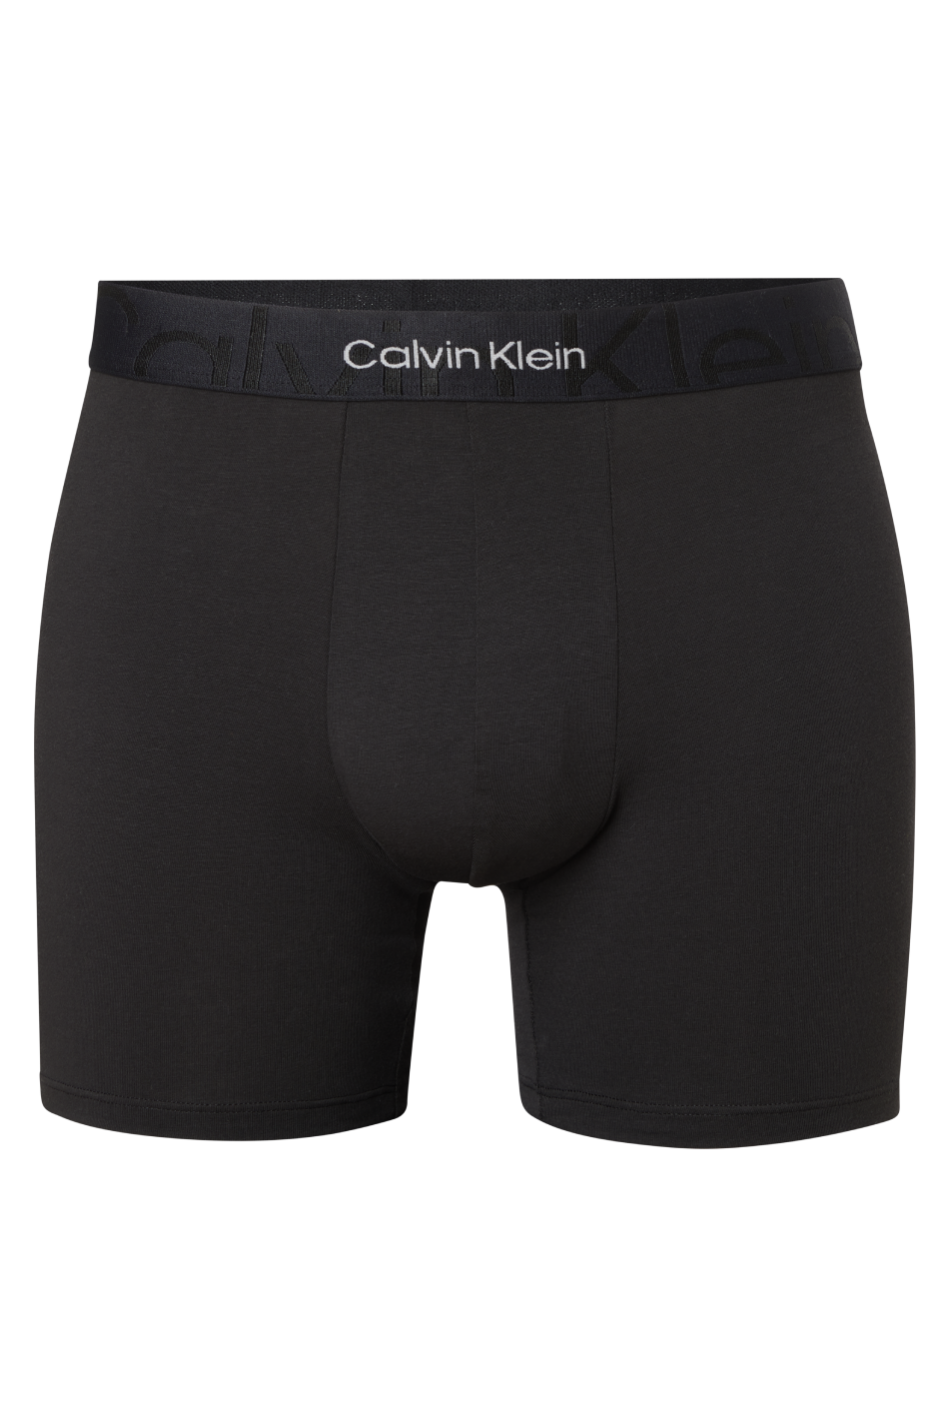 Calvin Klein Men's Recycled Cotton Stretch Boxer Brief